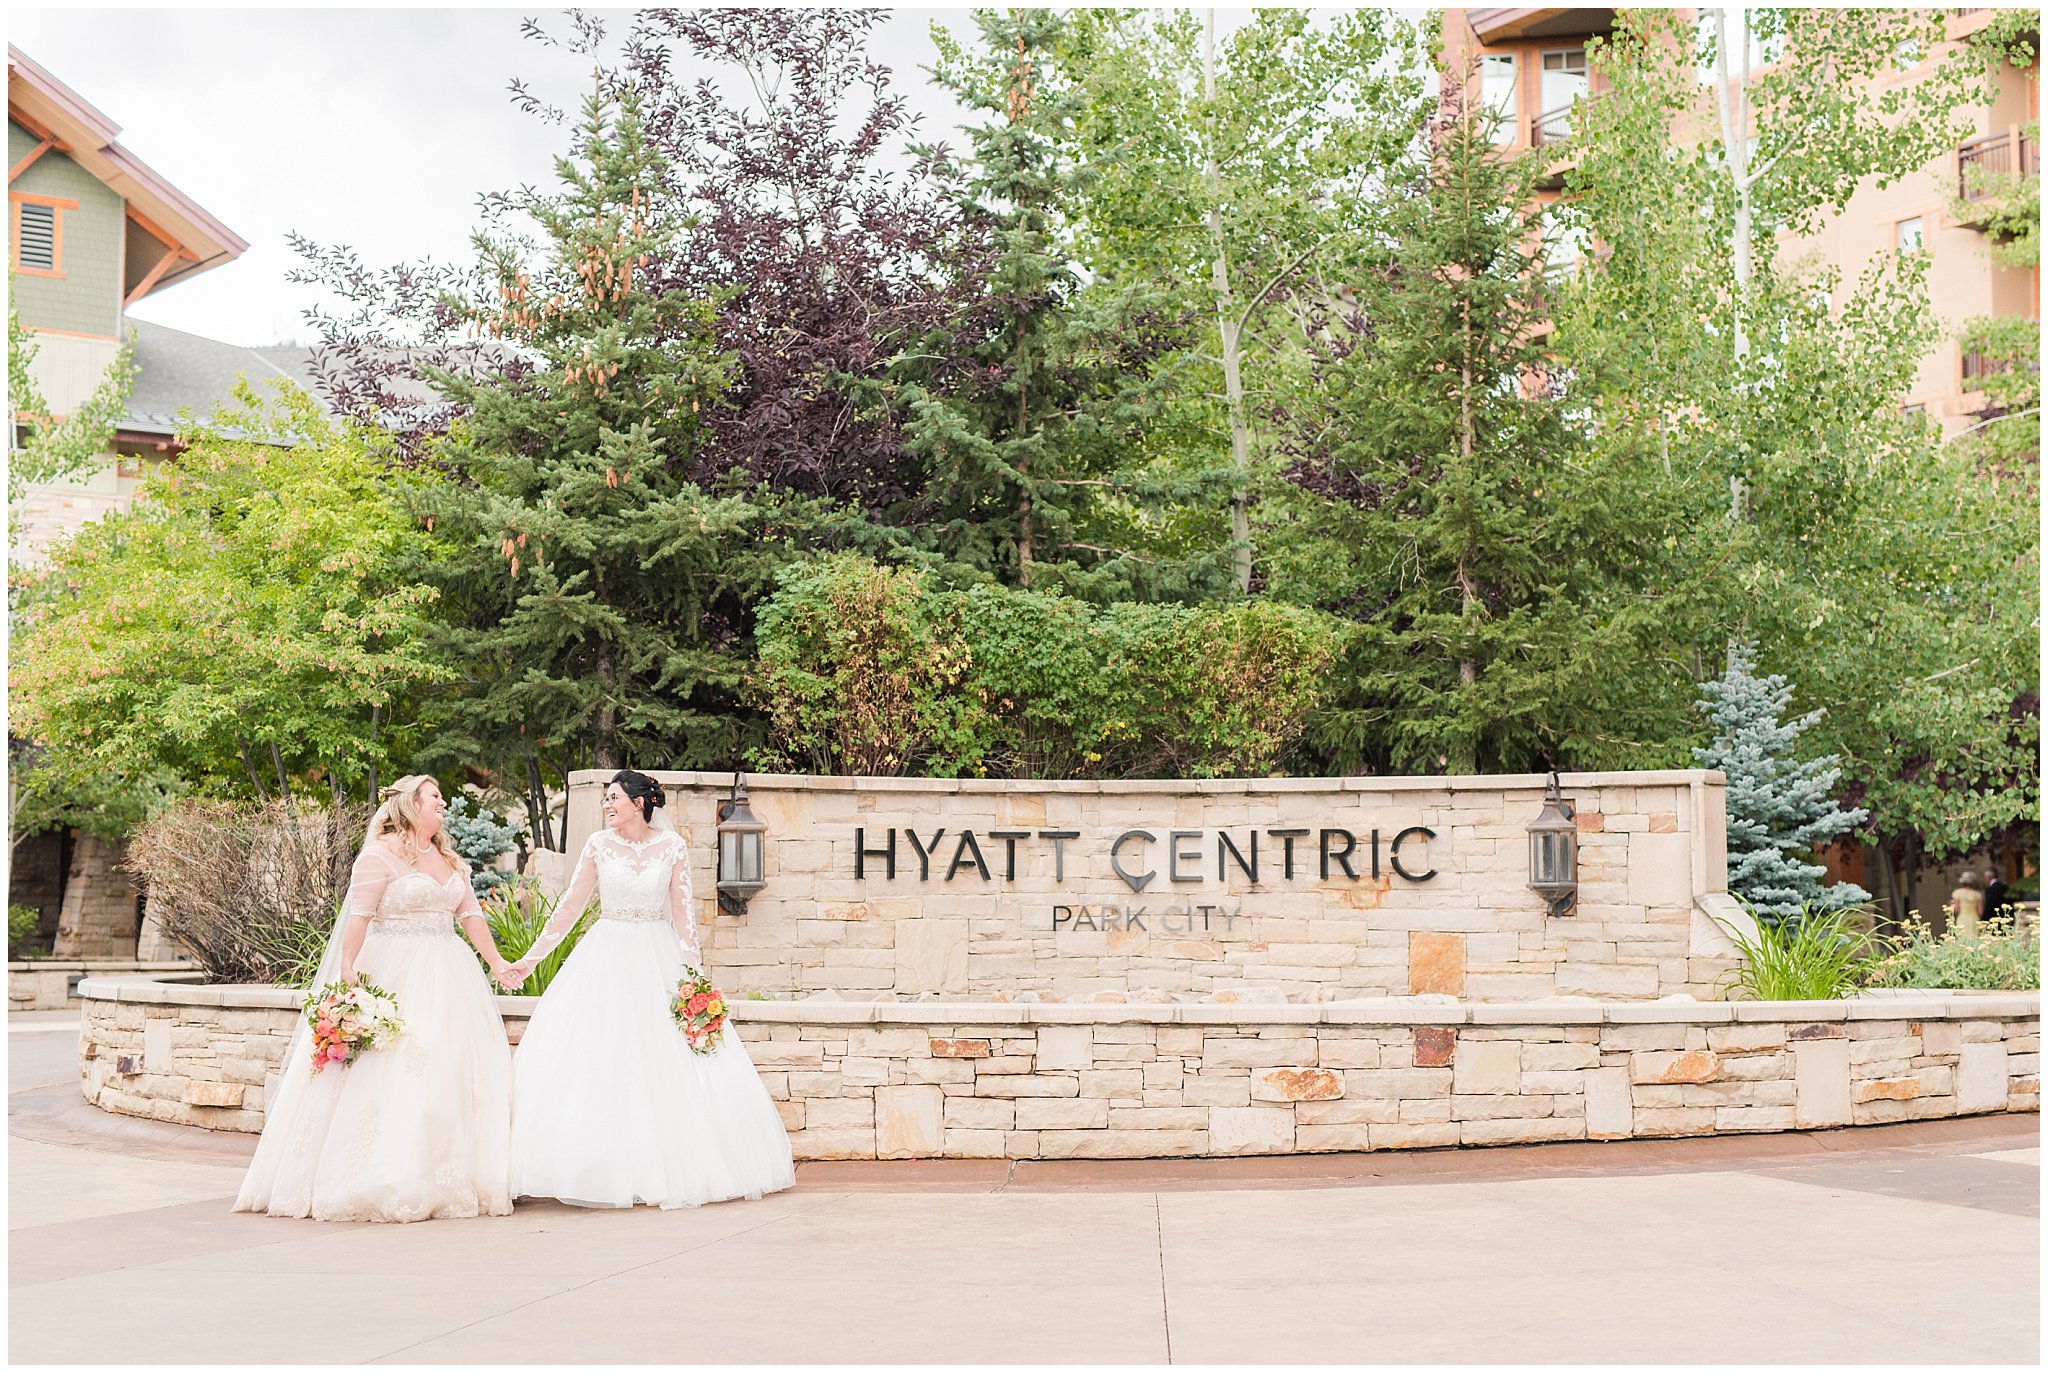 Wedding portraits at the Hyatt Centric Park City | Utah Mountain Wedding Venue